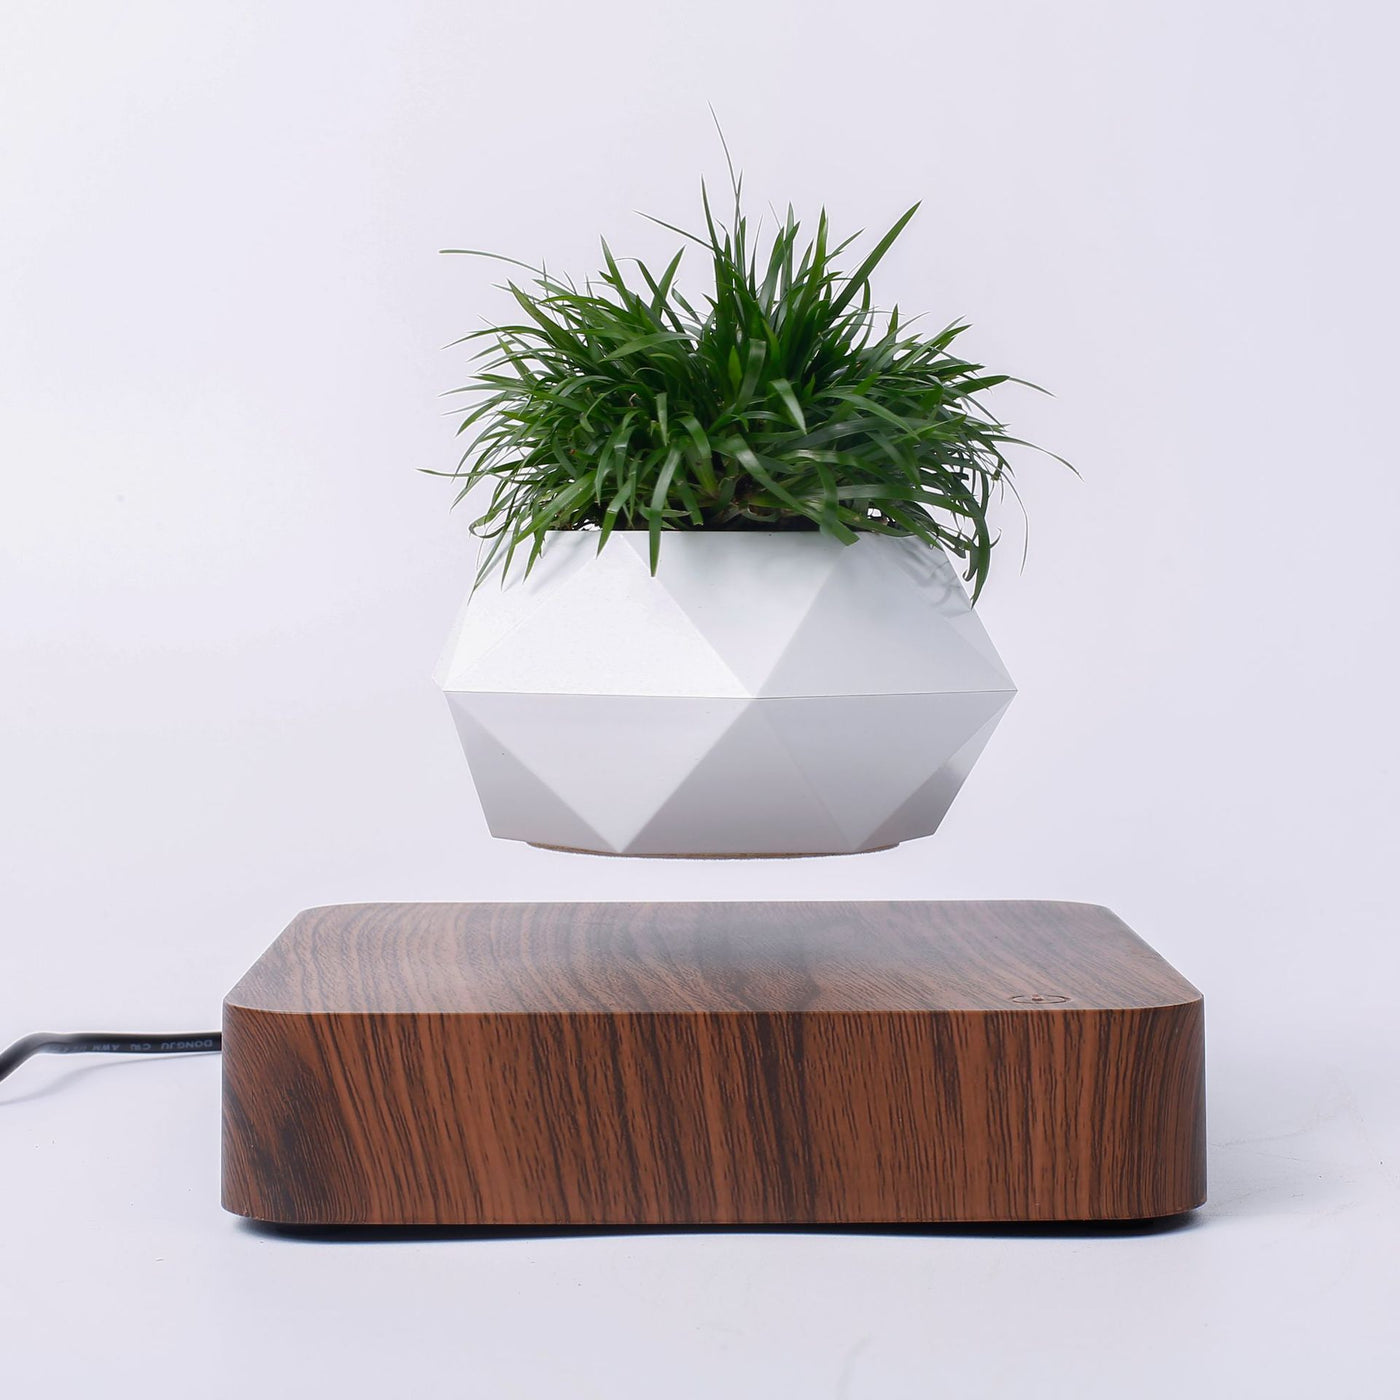 Levitating Desk Plant Pot - Glamorous Hangups Ltd